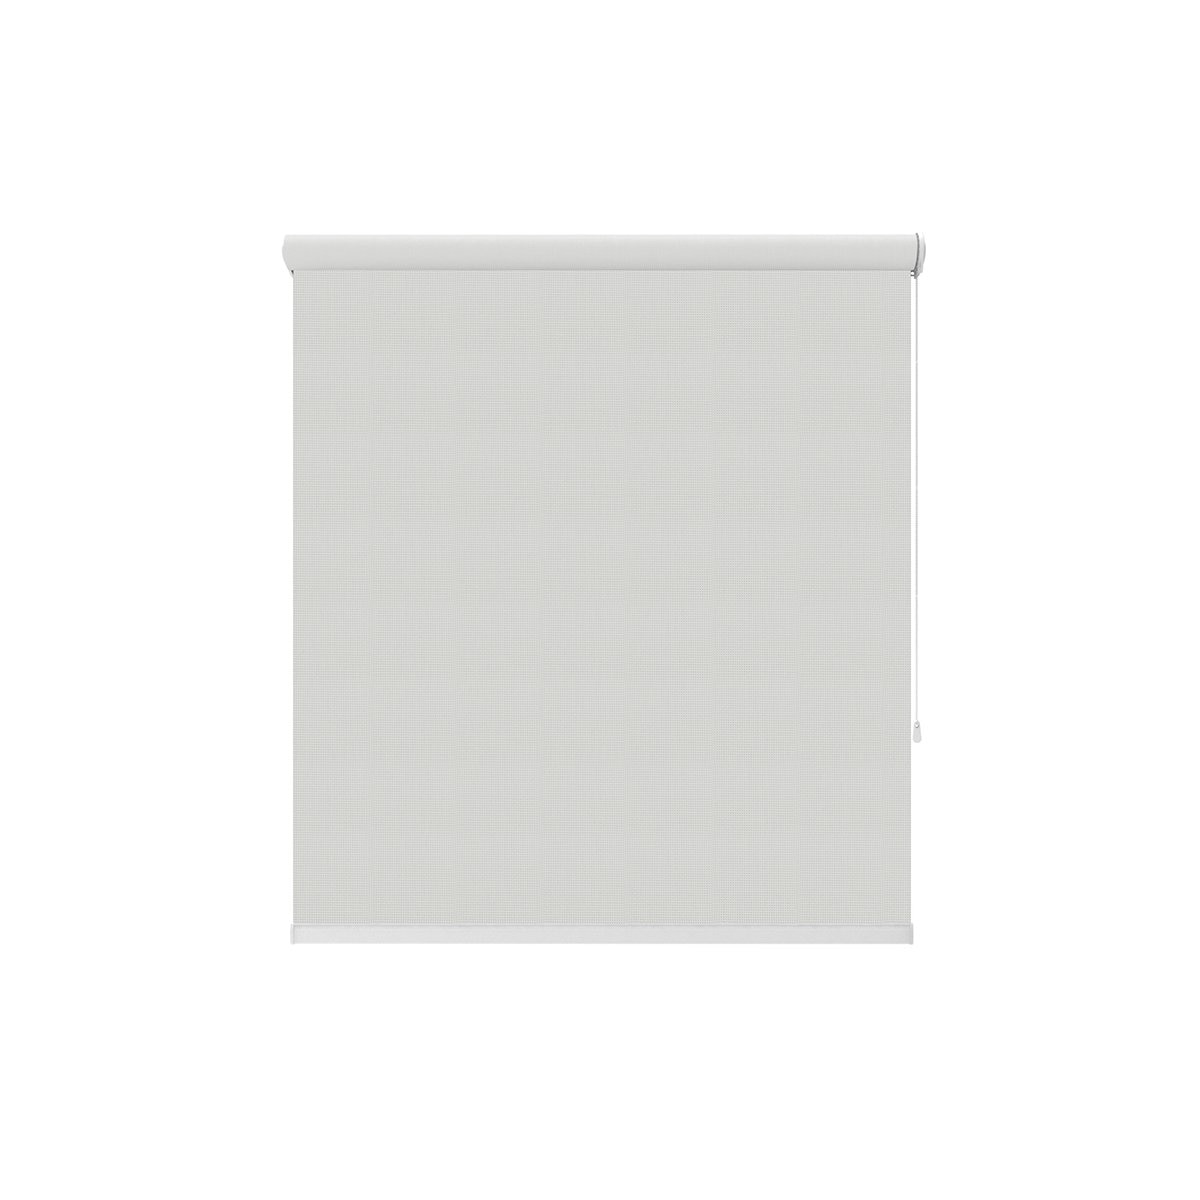 Persiana Enrollable Translucida Screen Phifer 4500 New 1.40 X 1.80 Blanco Classic